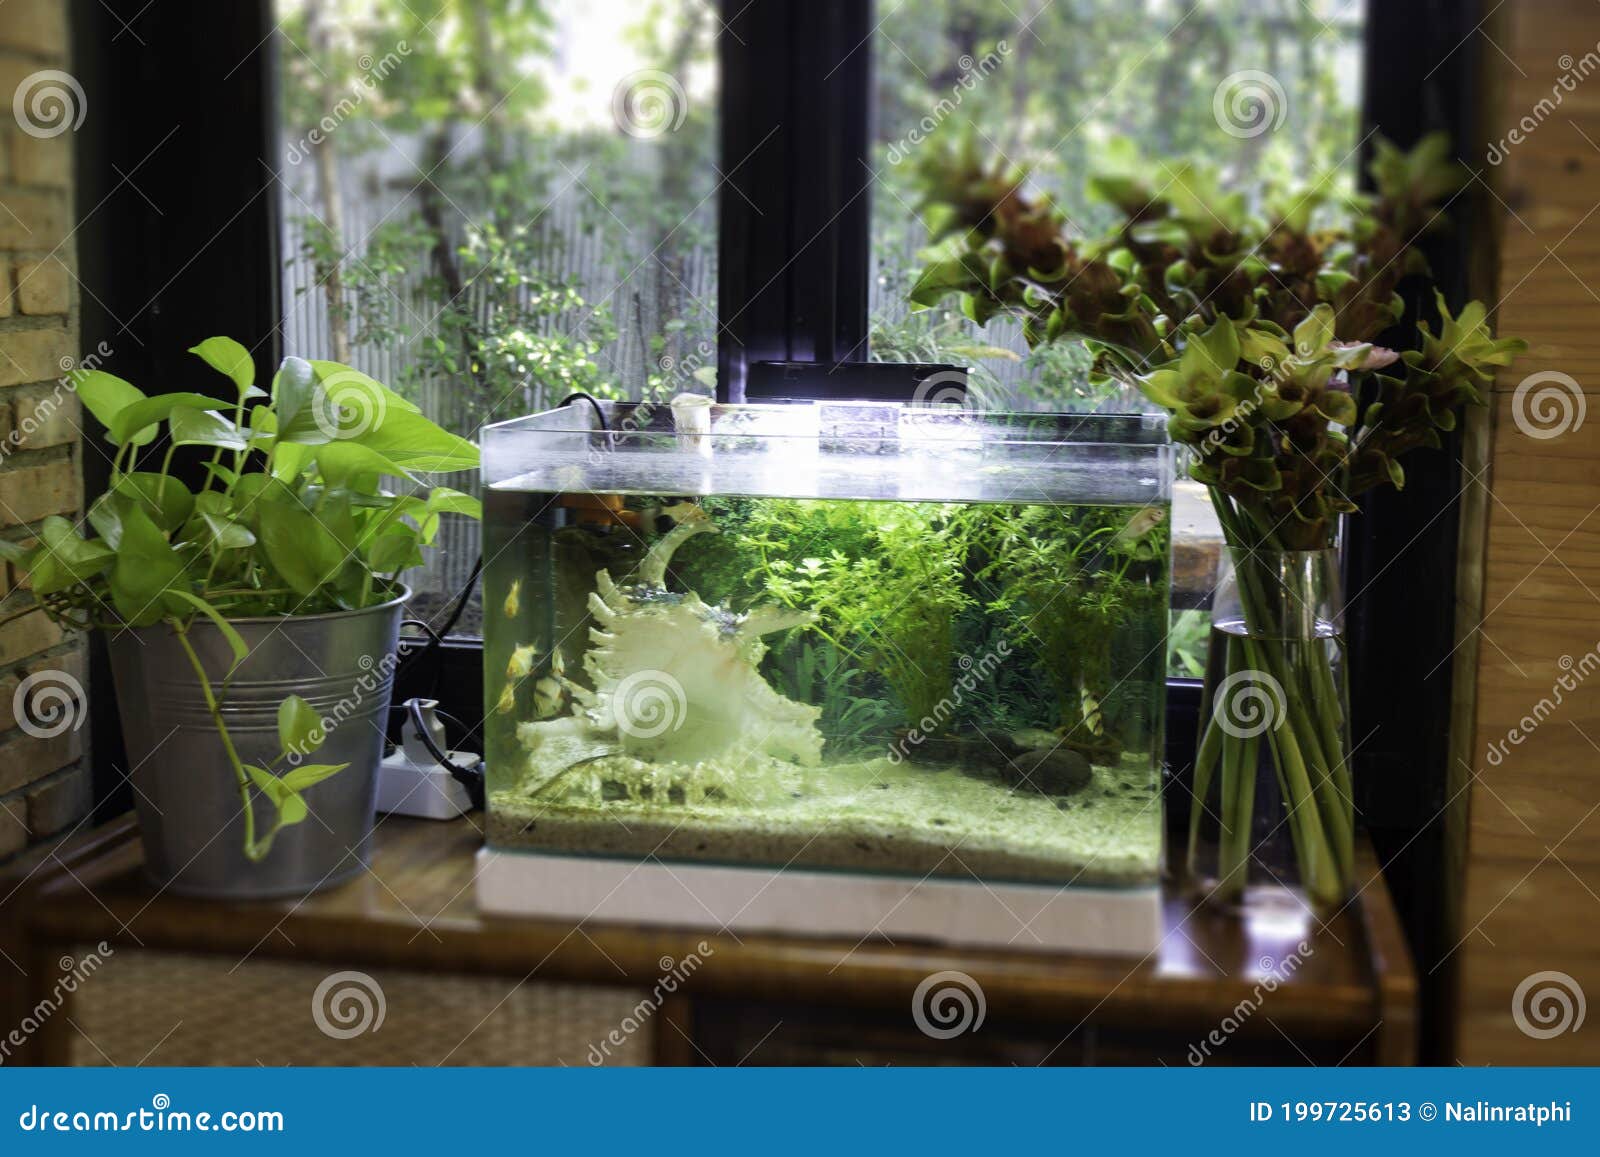 Small Fish Tank Aquarium Interior Stock Image - Image of fishbowl